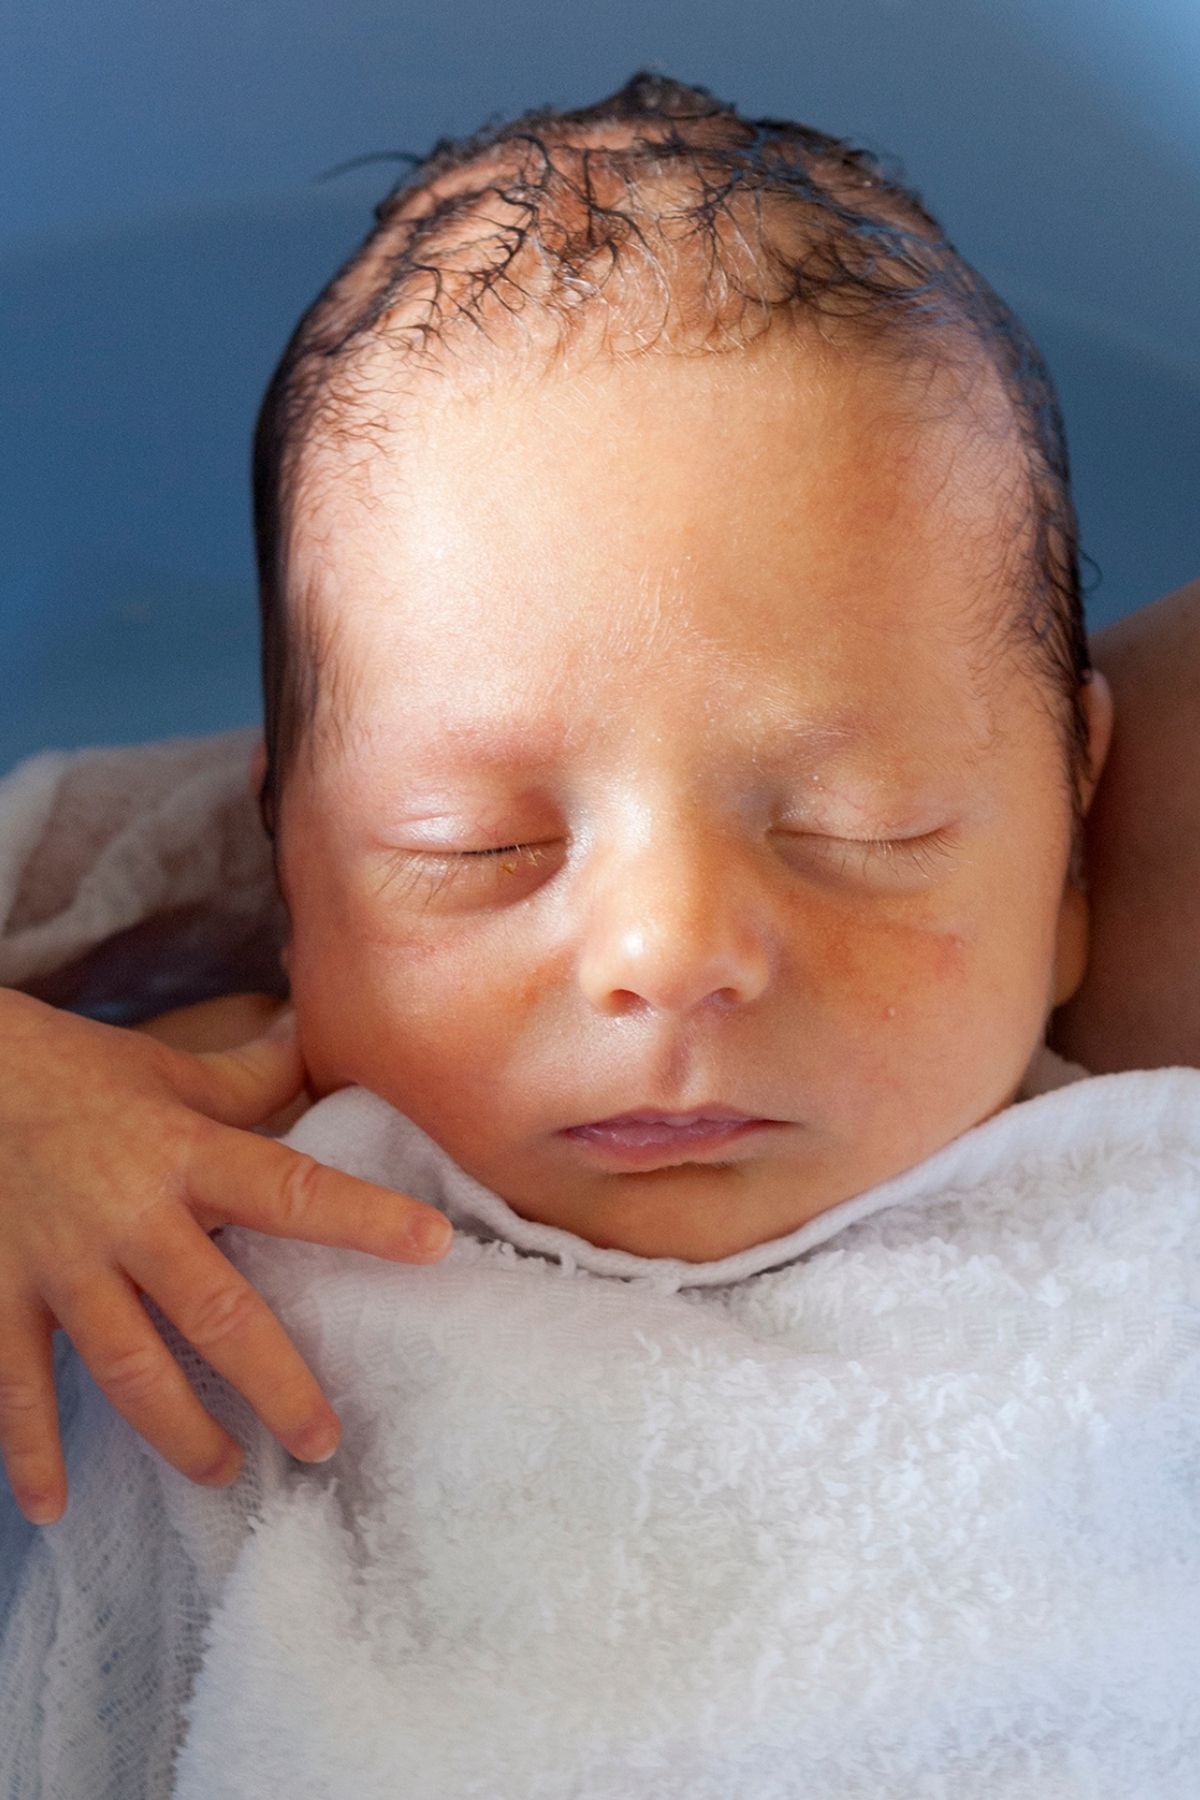 A newborn getting a bath with a white cloth over their chest.